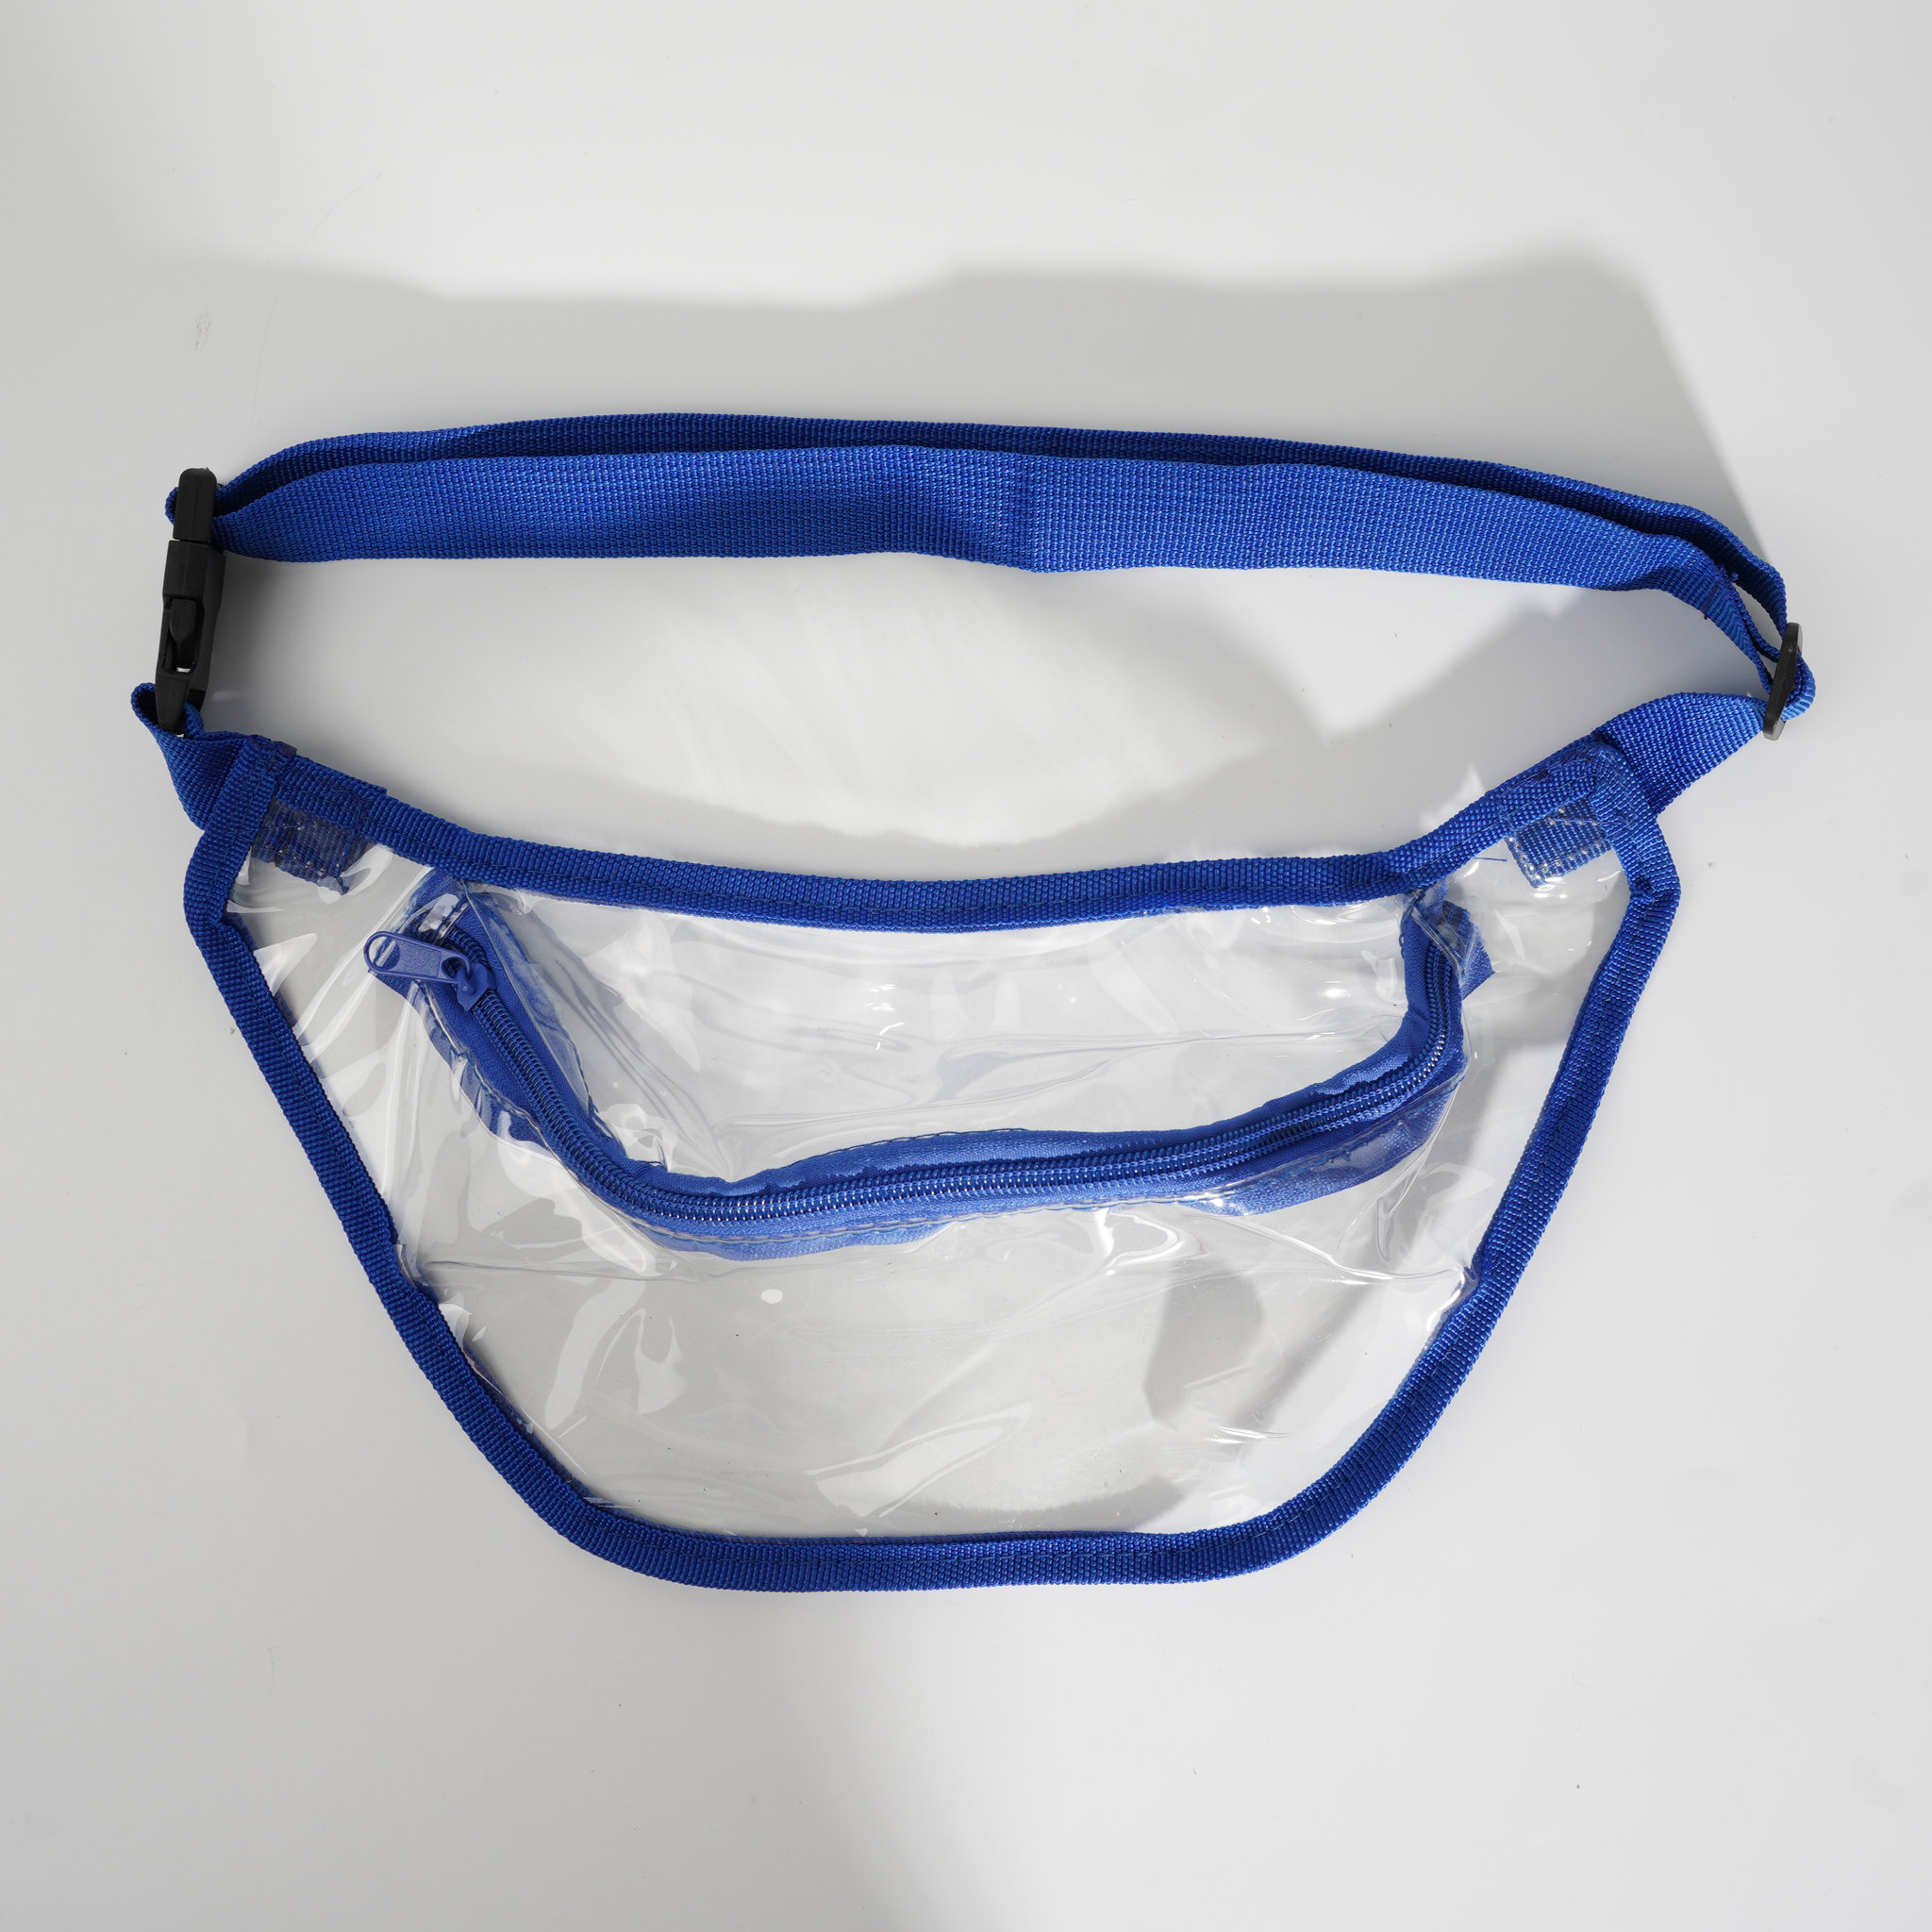 PVC Waterproof Waist Bag With Adjustable Strap3